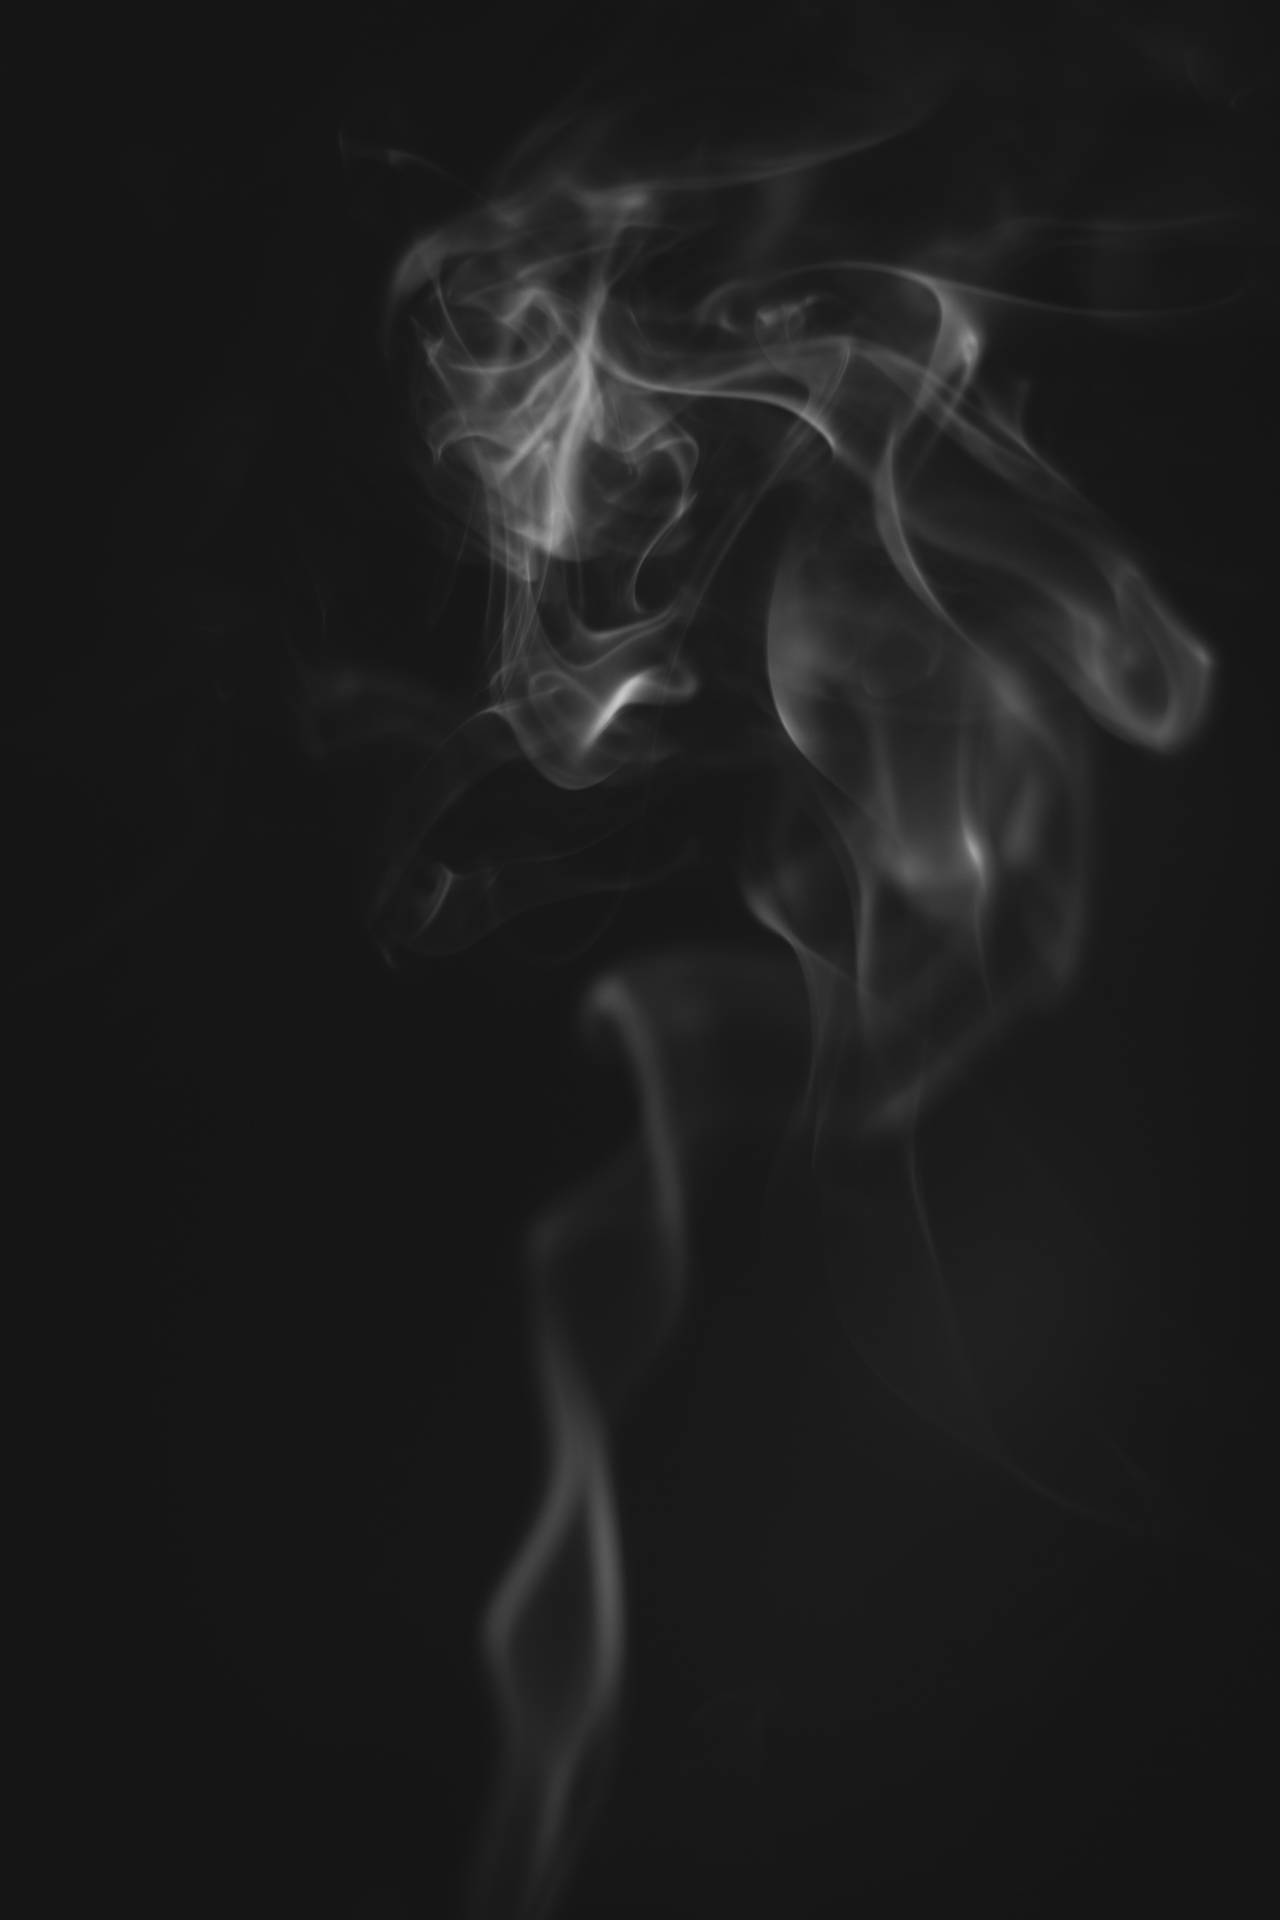 Smoke 3648X5472 Wallpaper and Background Image